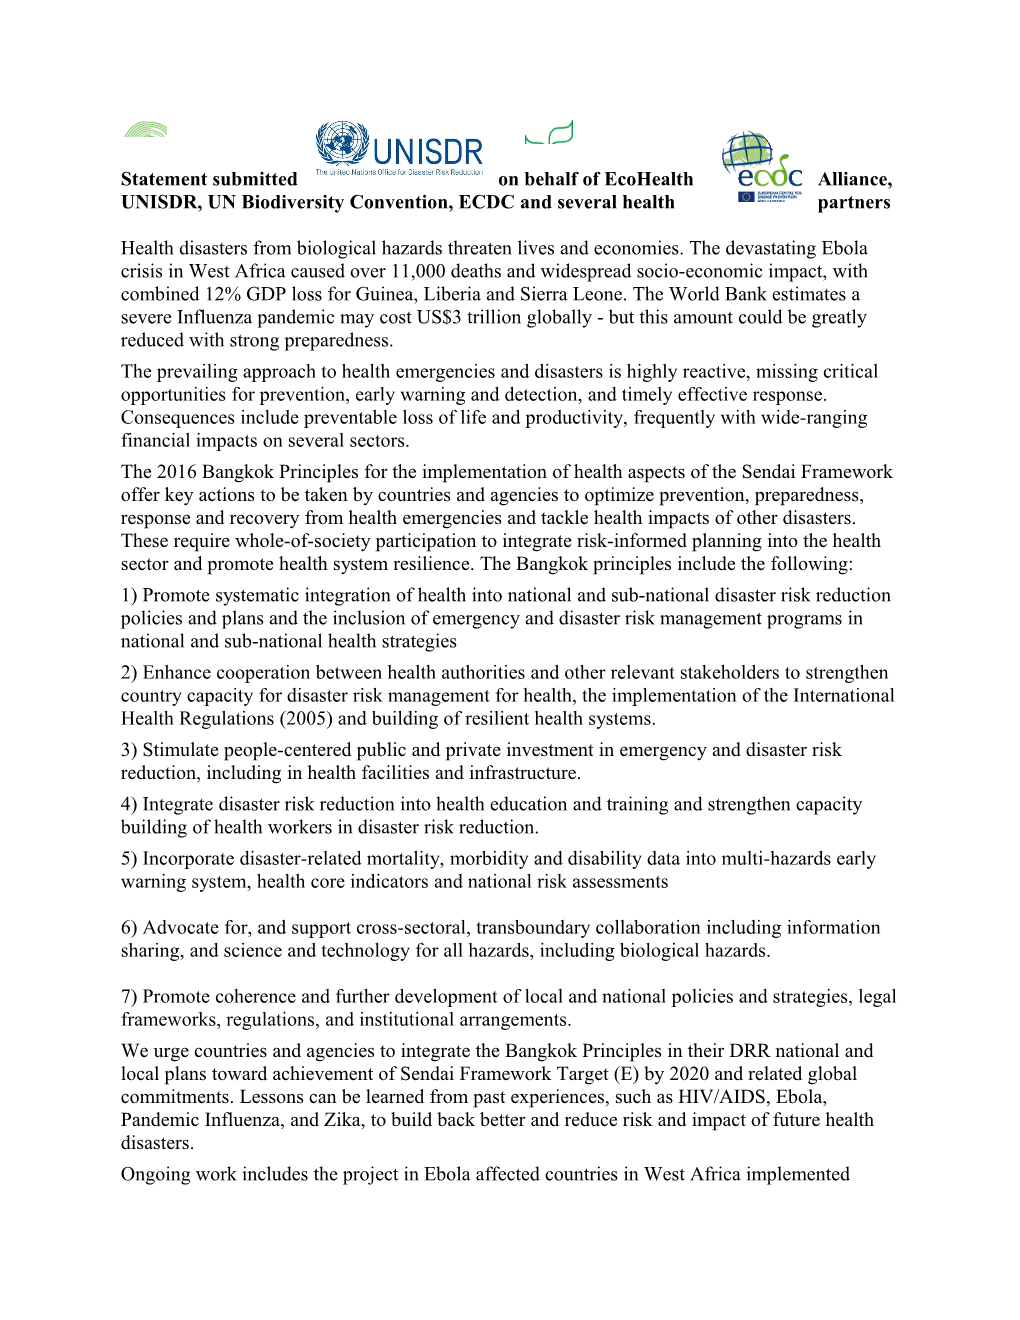 Statement Submitted on Behalf of Ecohealth Alliance, UNISDR, UN Biodiversity Convention